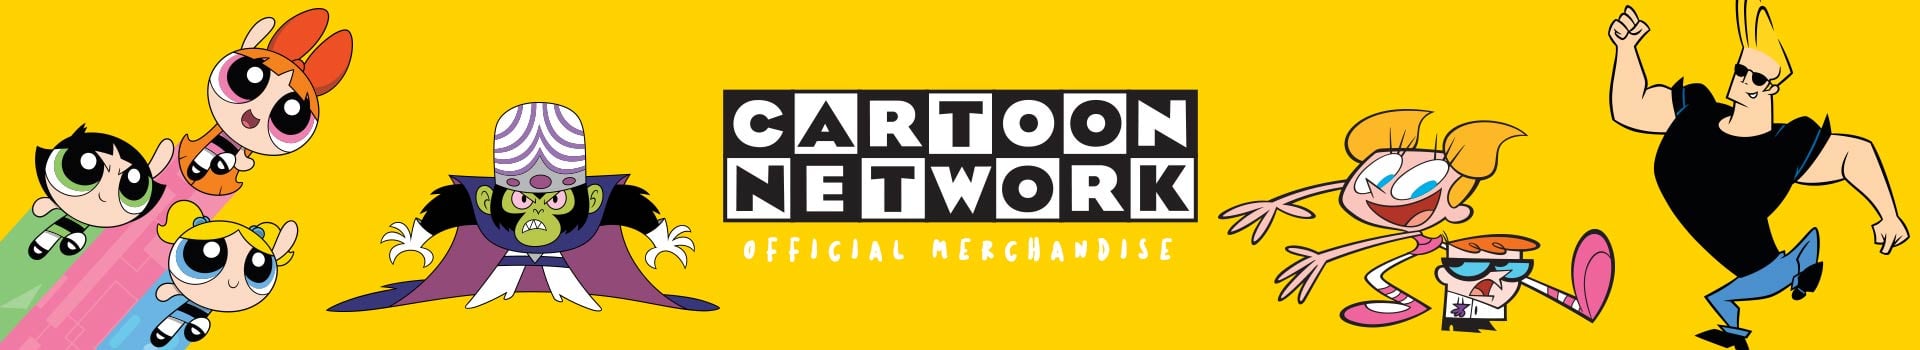 Cartoon Network Merchandise